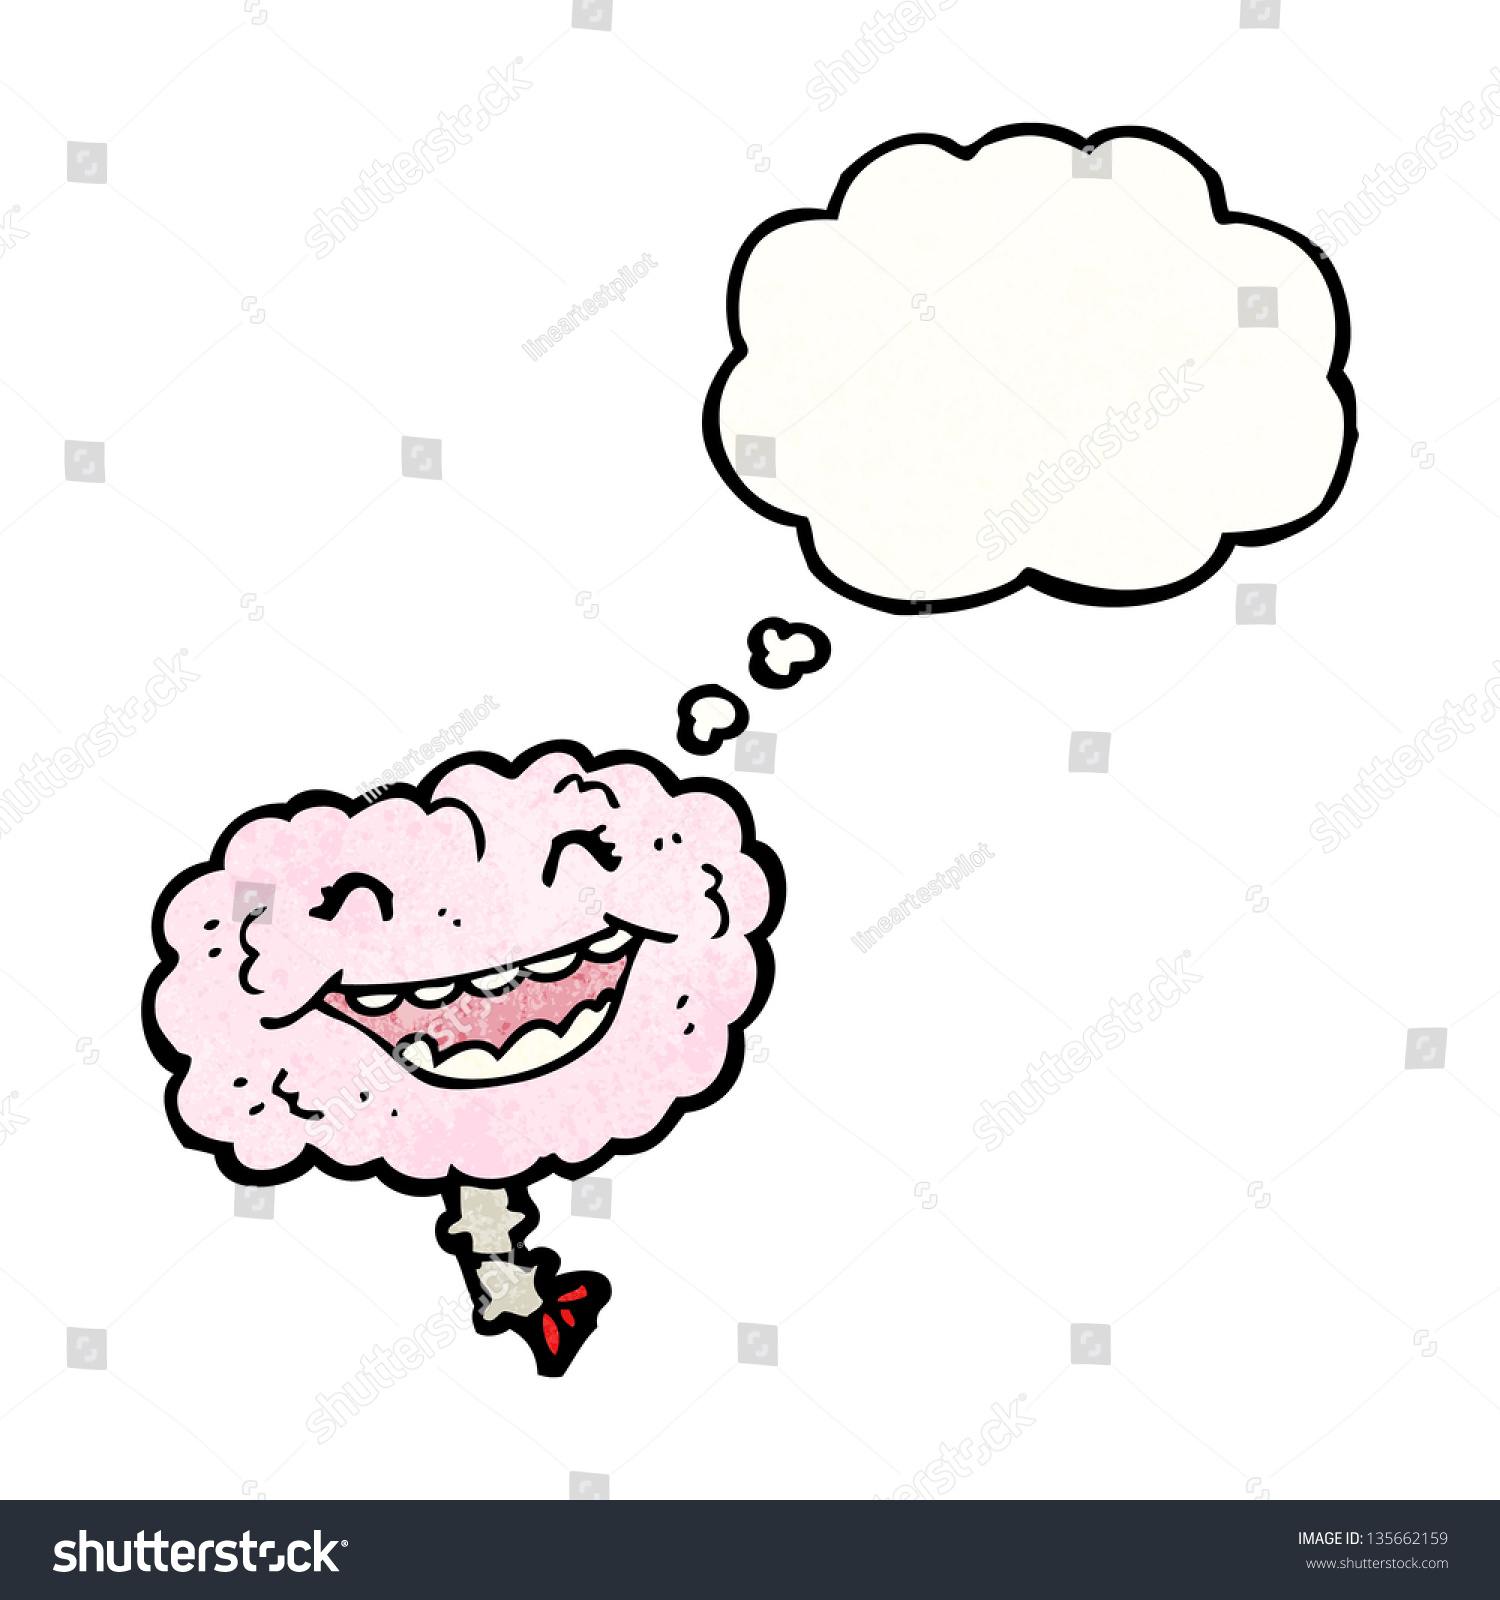 Laughing Brain Cartoon Stock Illustration 135662159 | Shutterstock